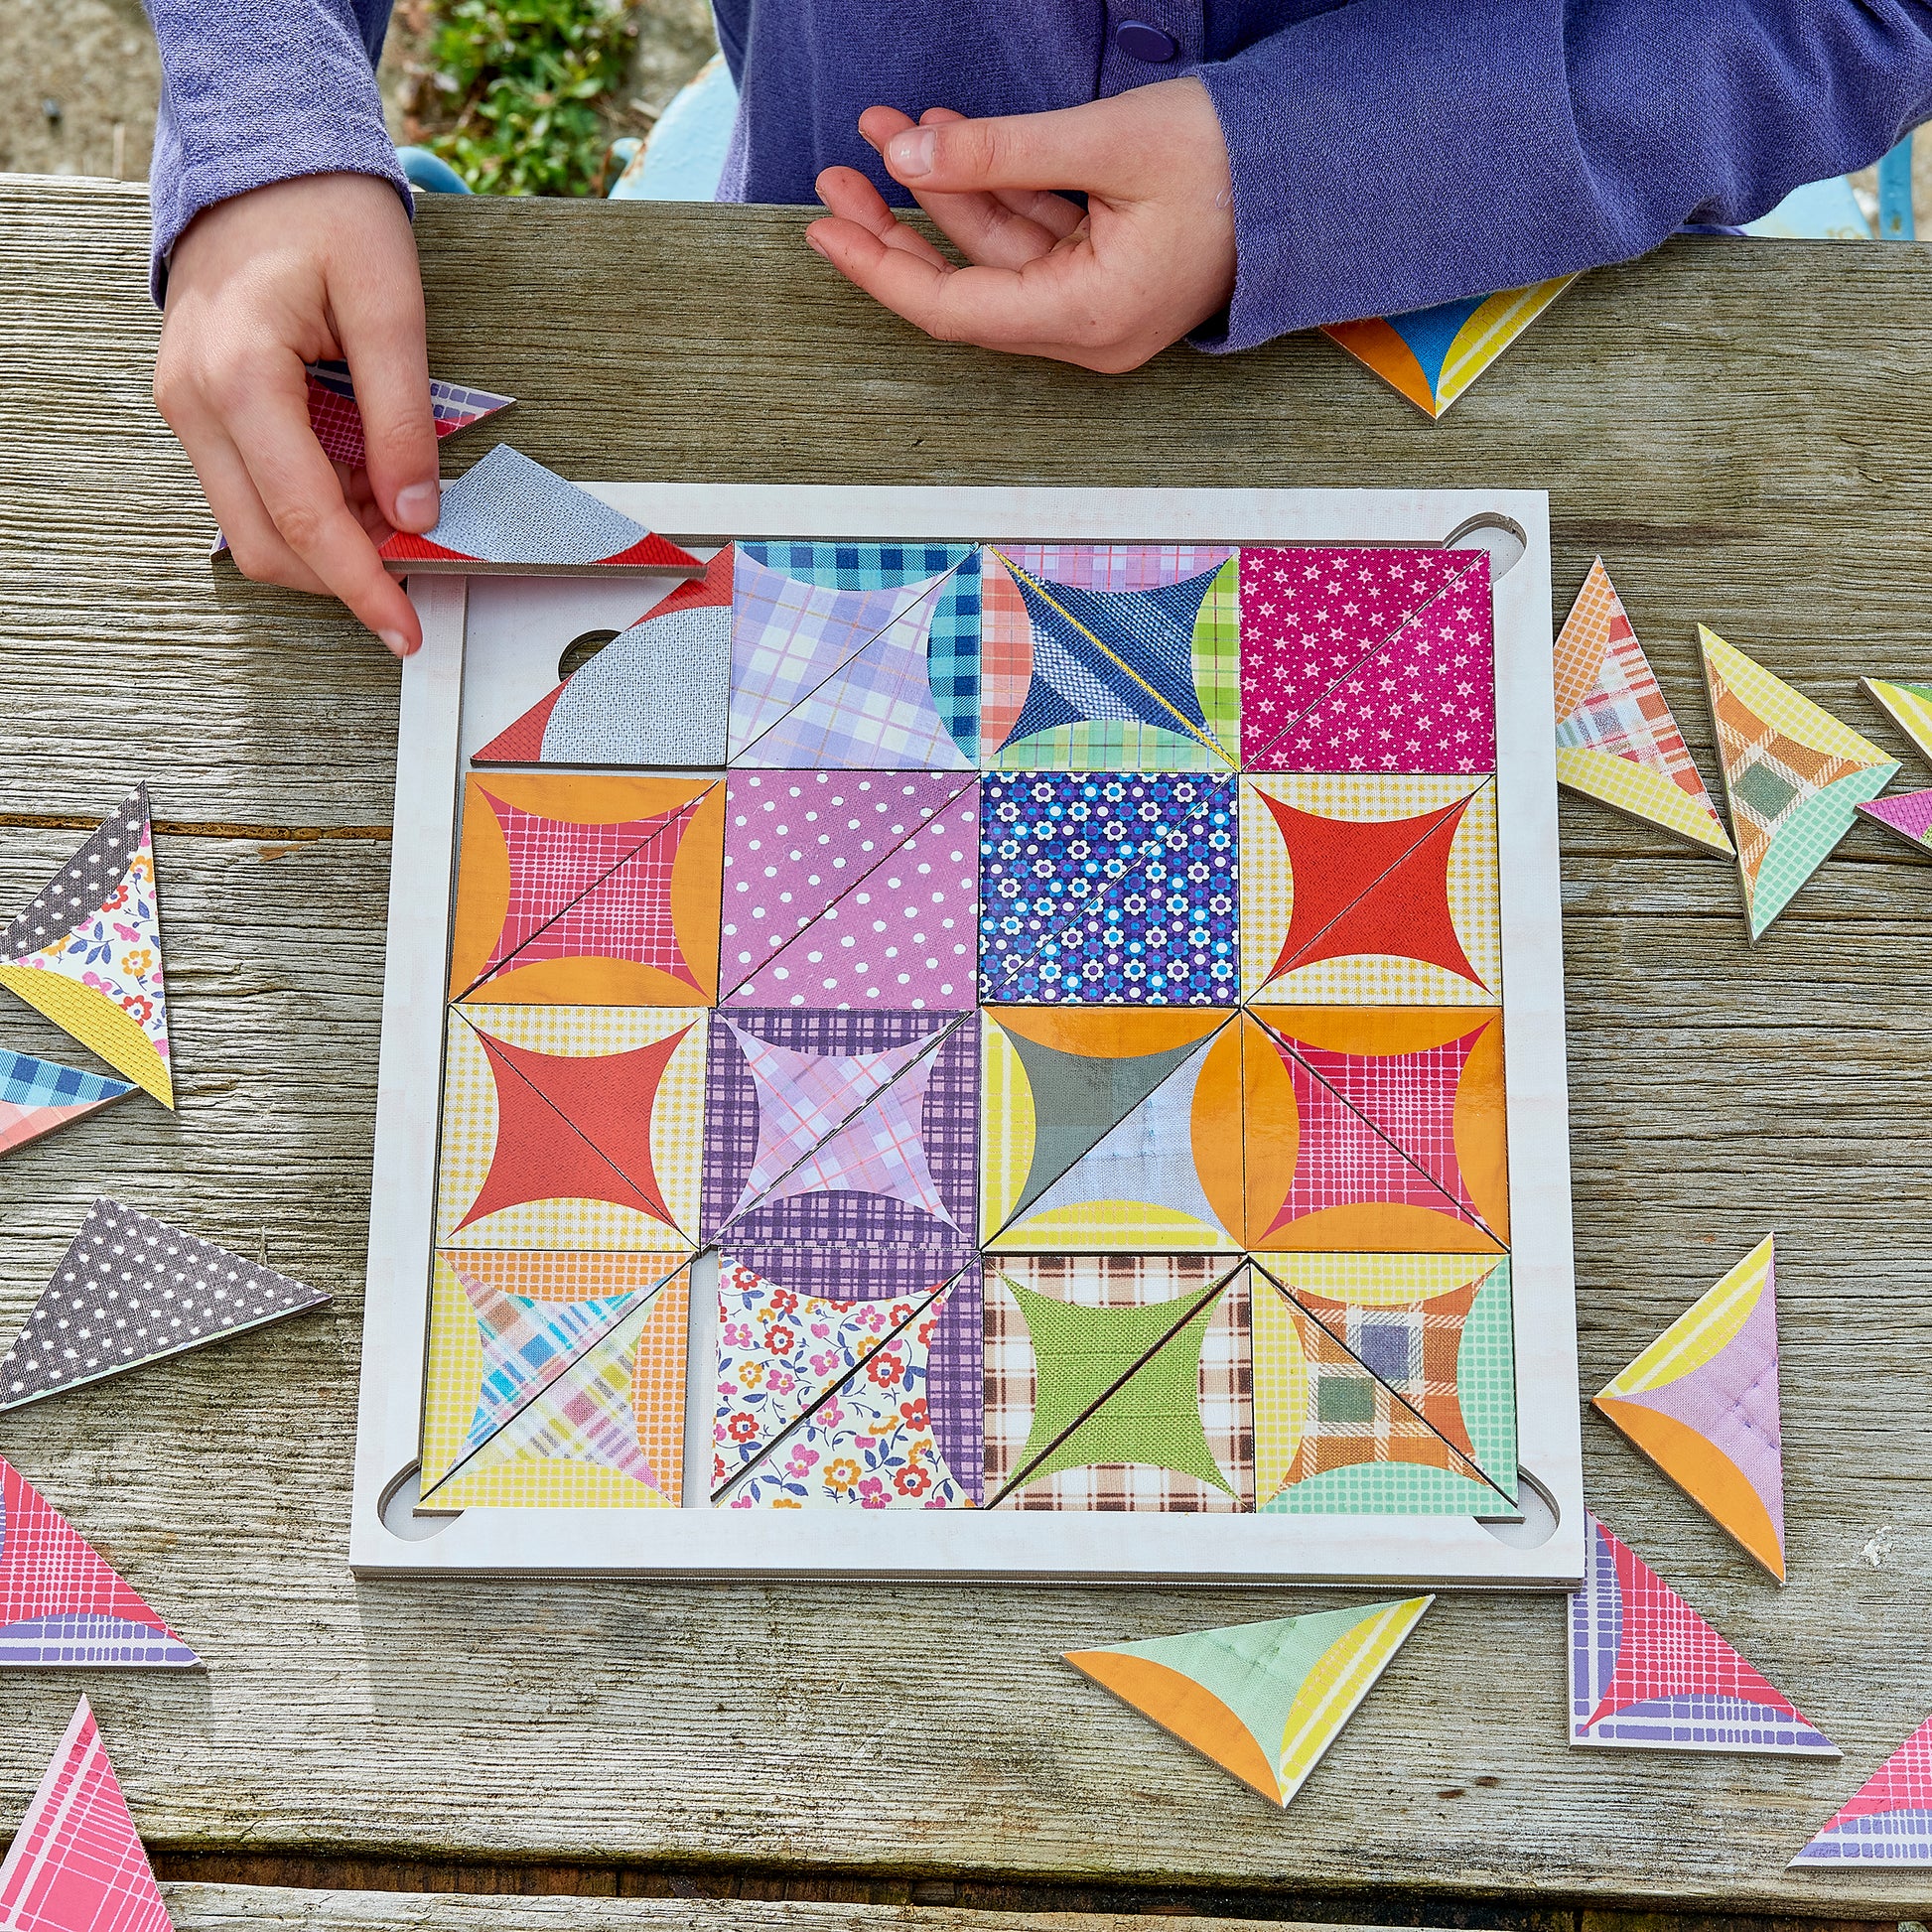 Patchwork Pattern Design Tiles eeBoo Unique Gifts for Kindergartner Kids 5+ Encourages Creative Play